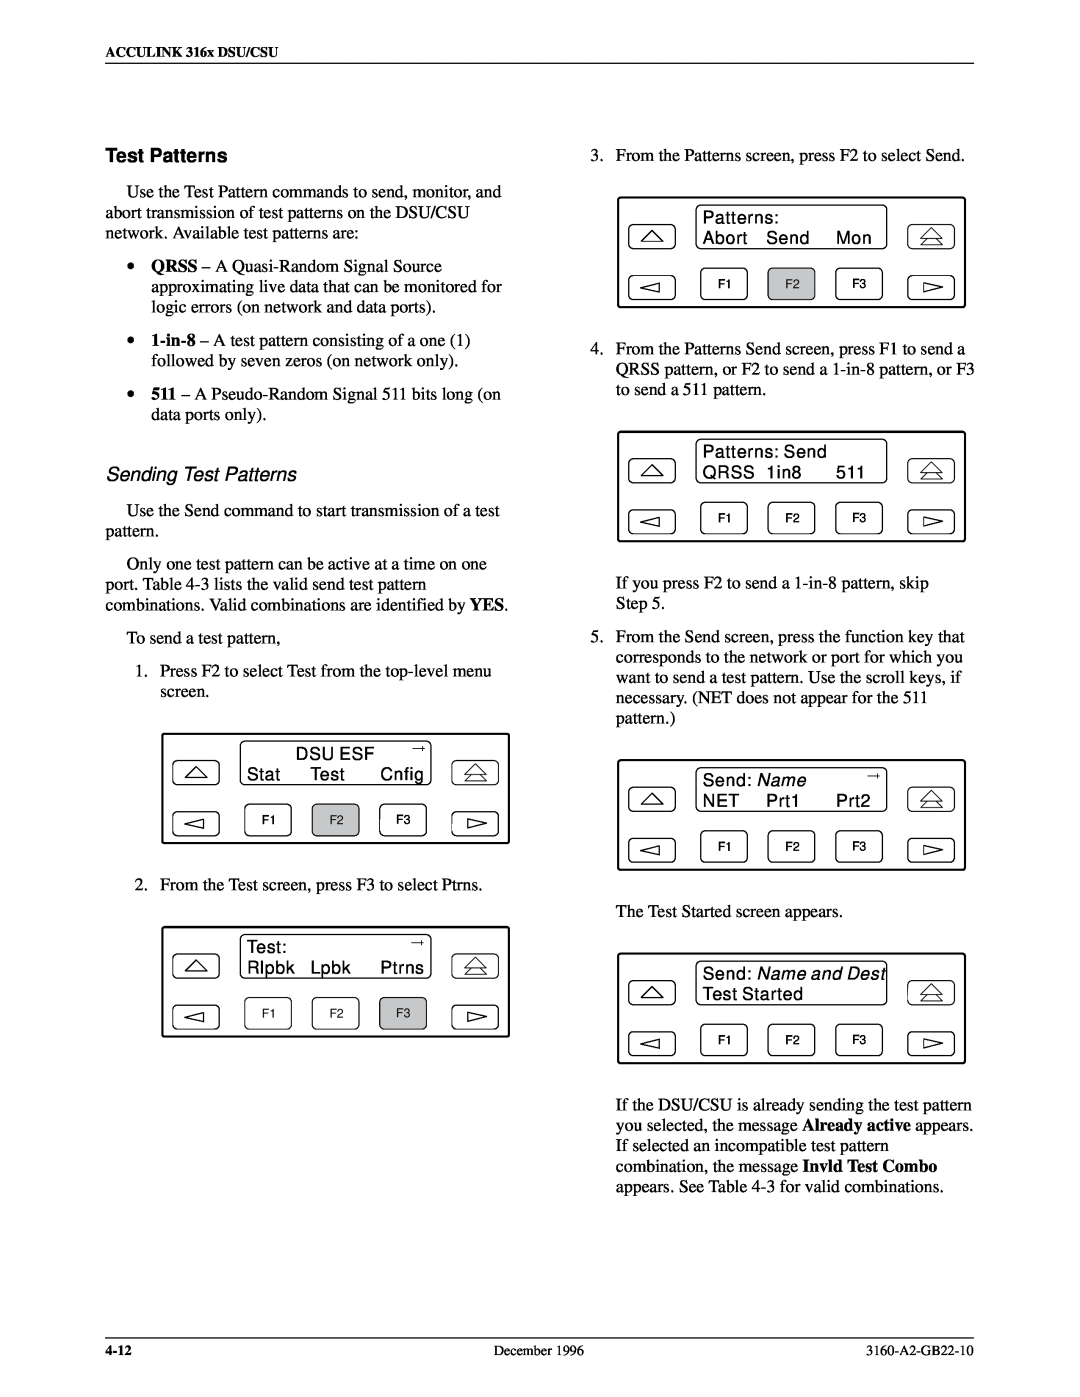 Paradyne 316x manual Sending Test Patterns, Send Name and Dest 